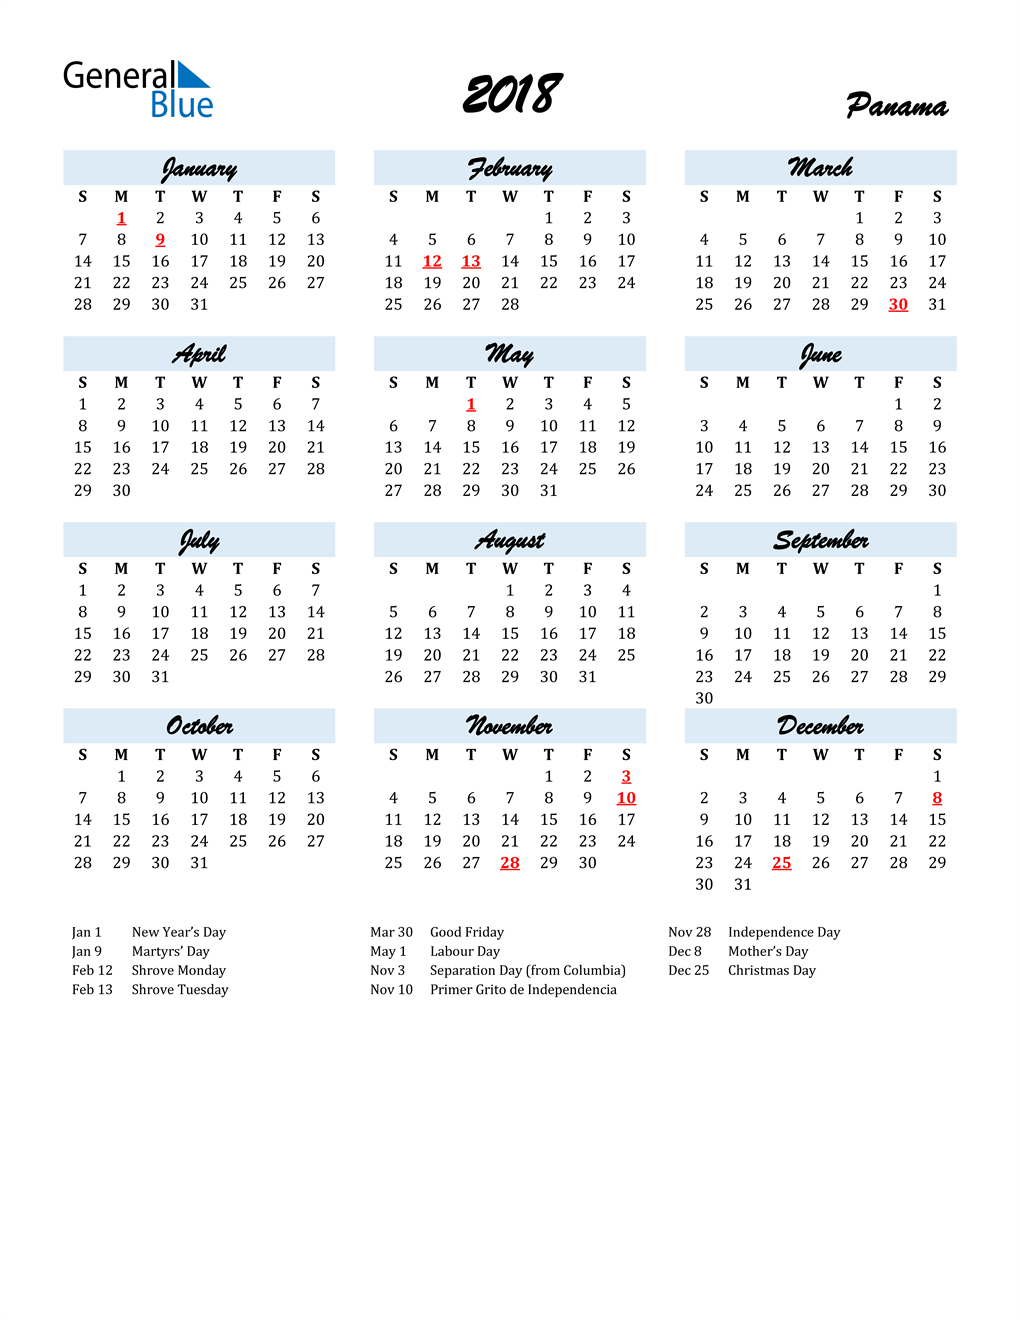 2018 Panama Calendar with Holidays